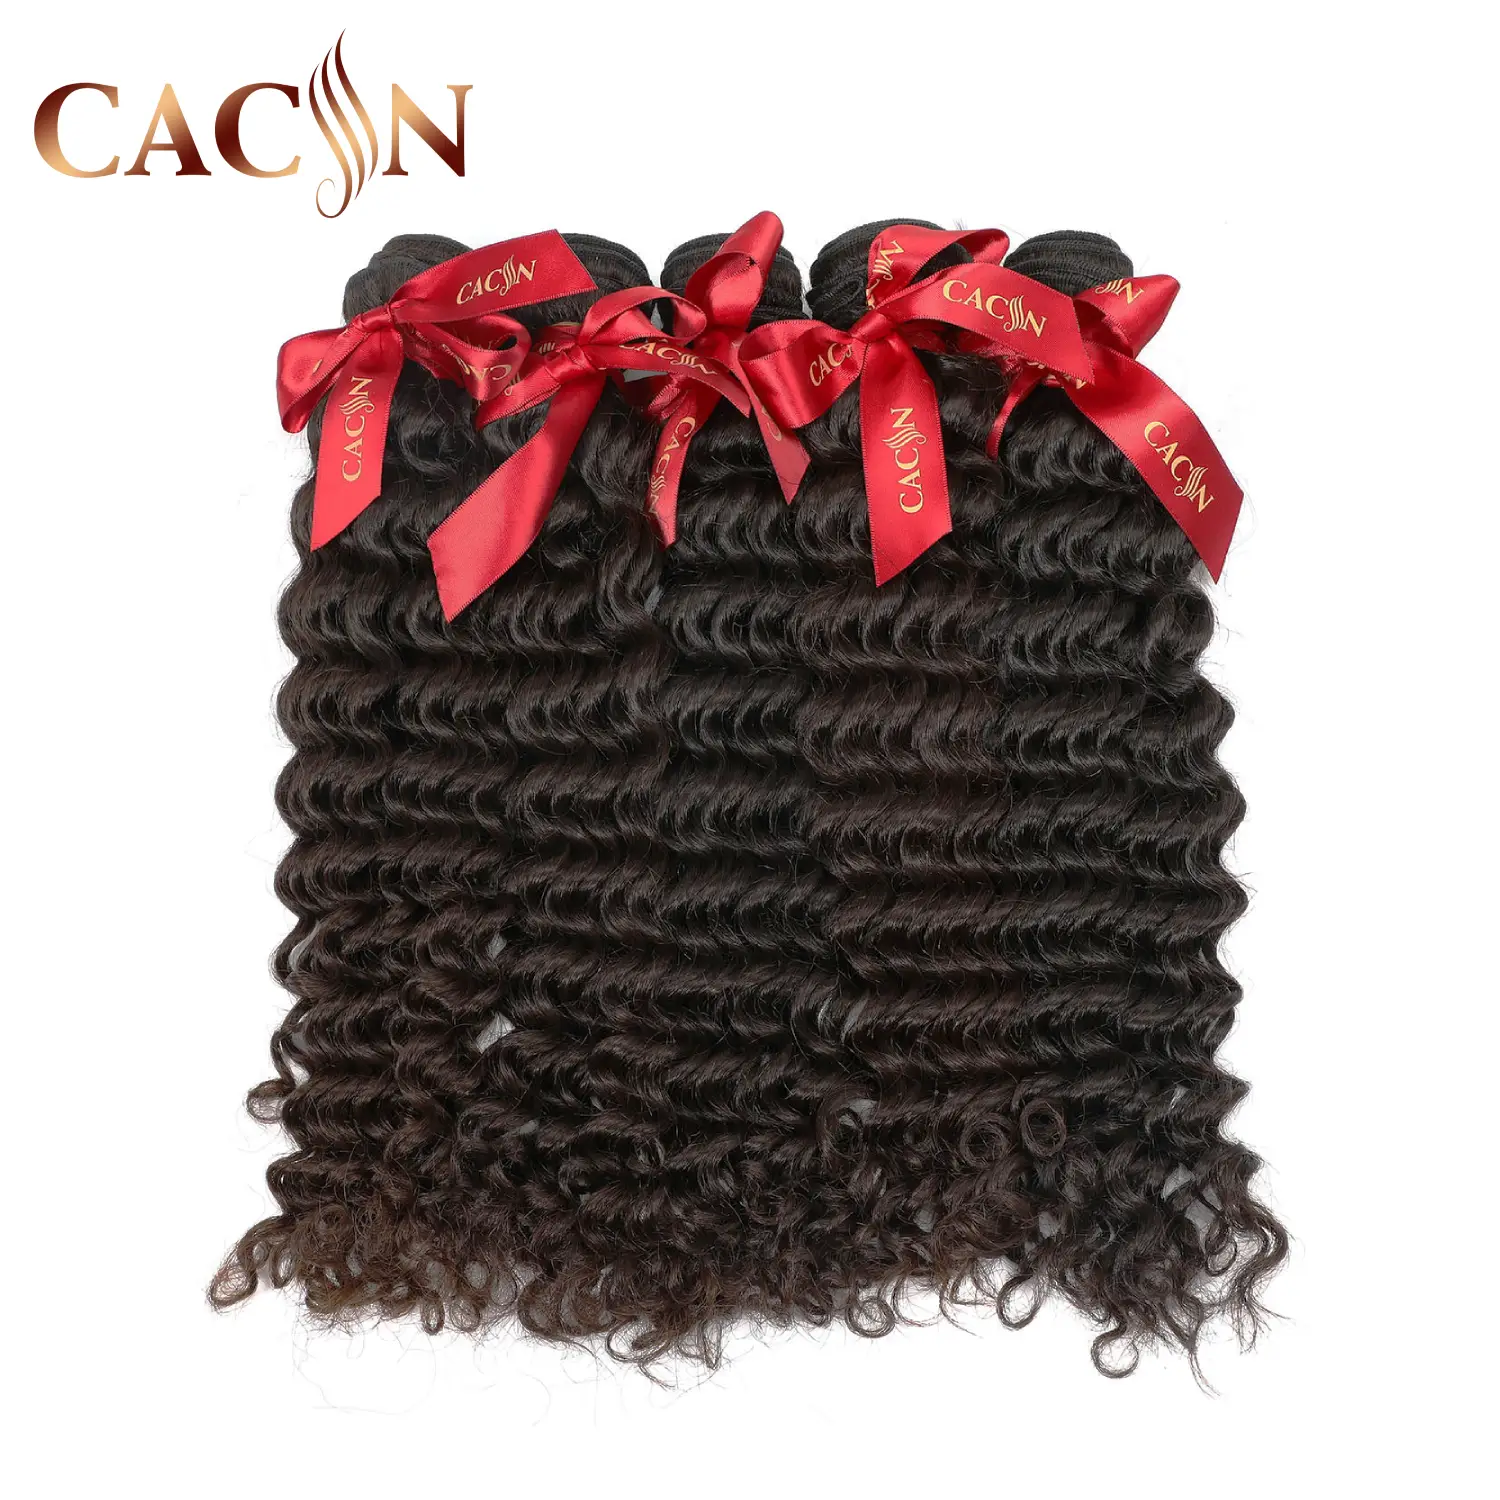 Malaysian raw hair deep curly bundles 1pcs, hair bundles deals, free shipping